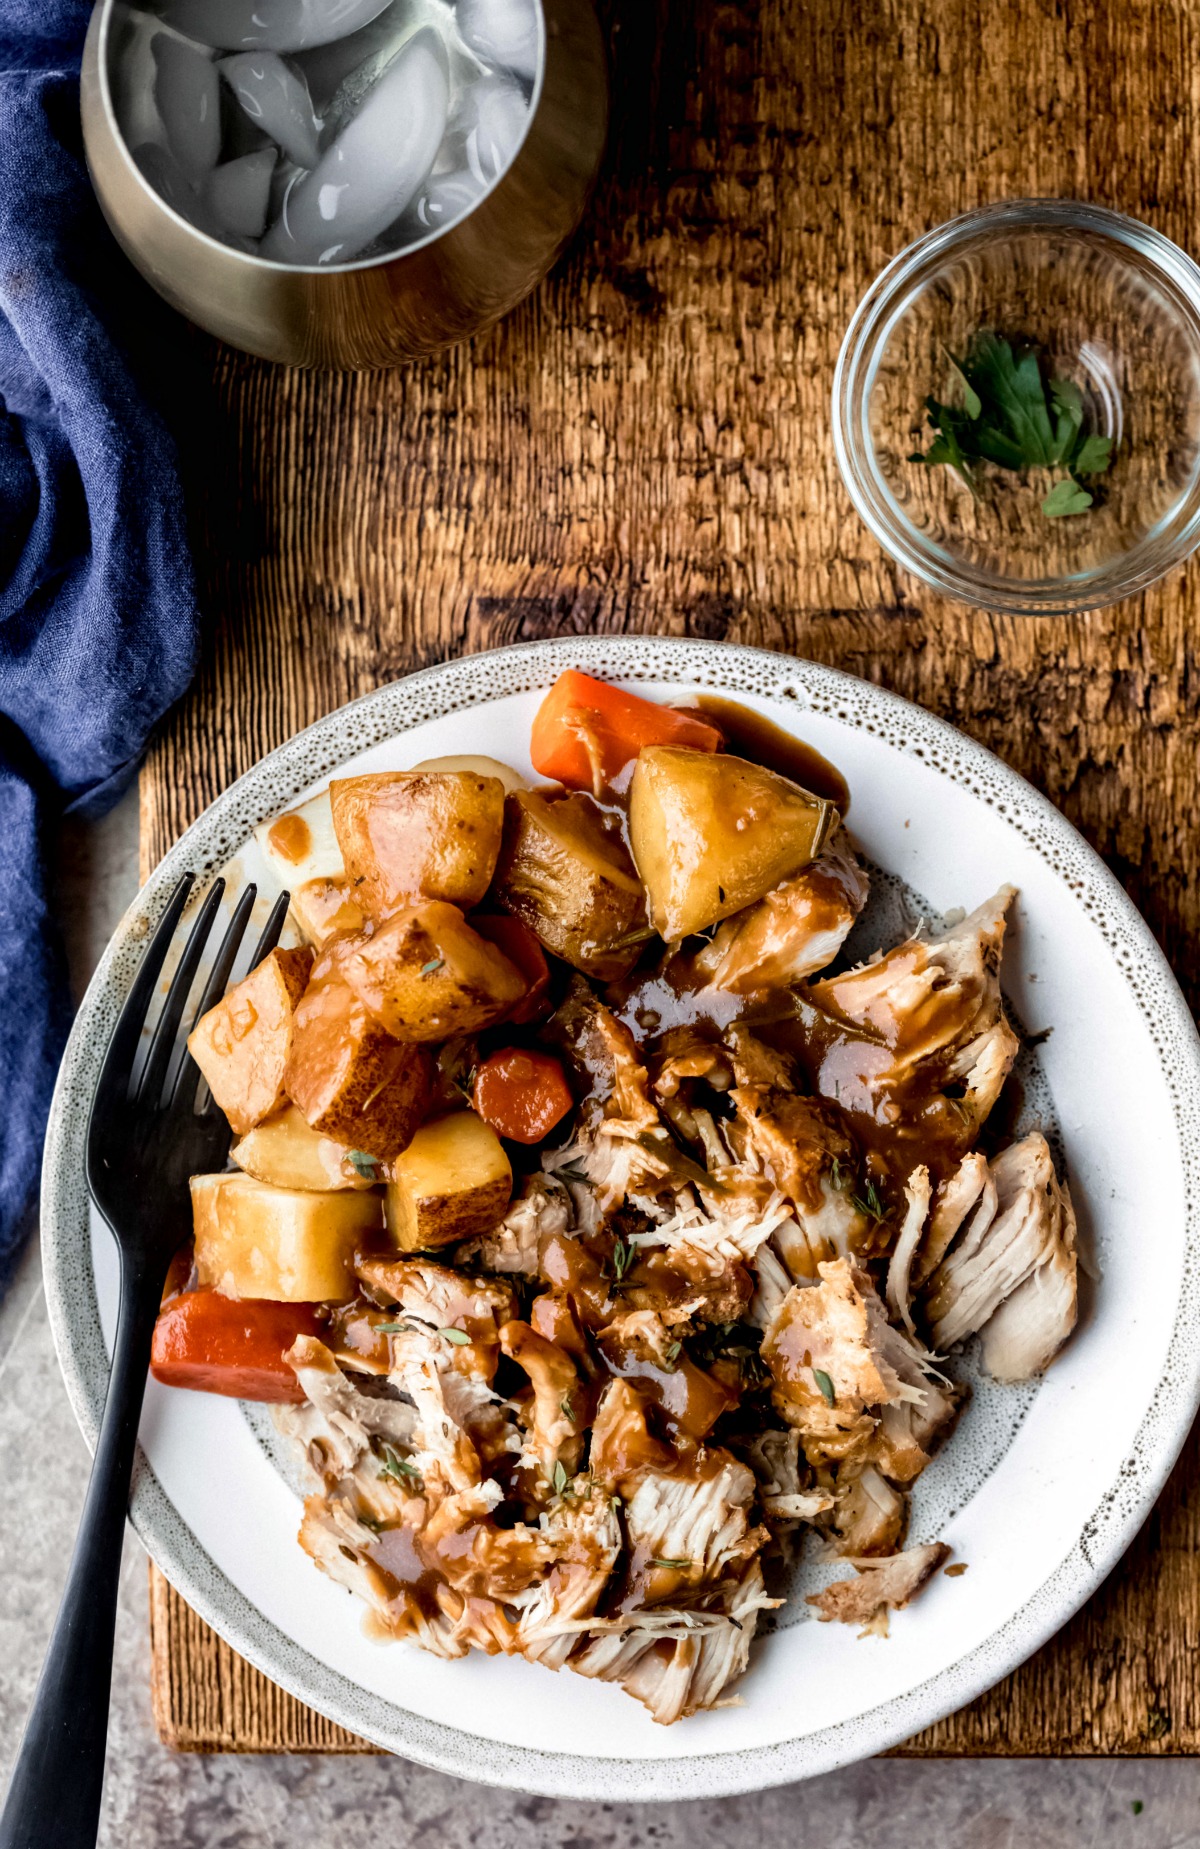 Pork roast with gravy carrots and potatoes.